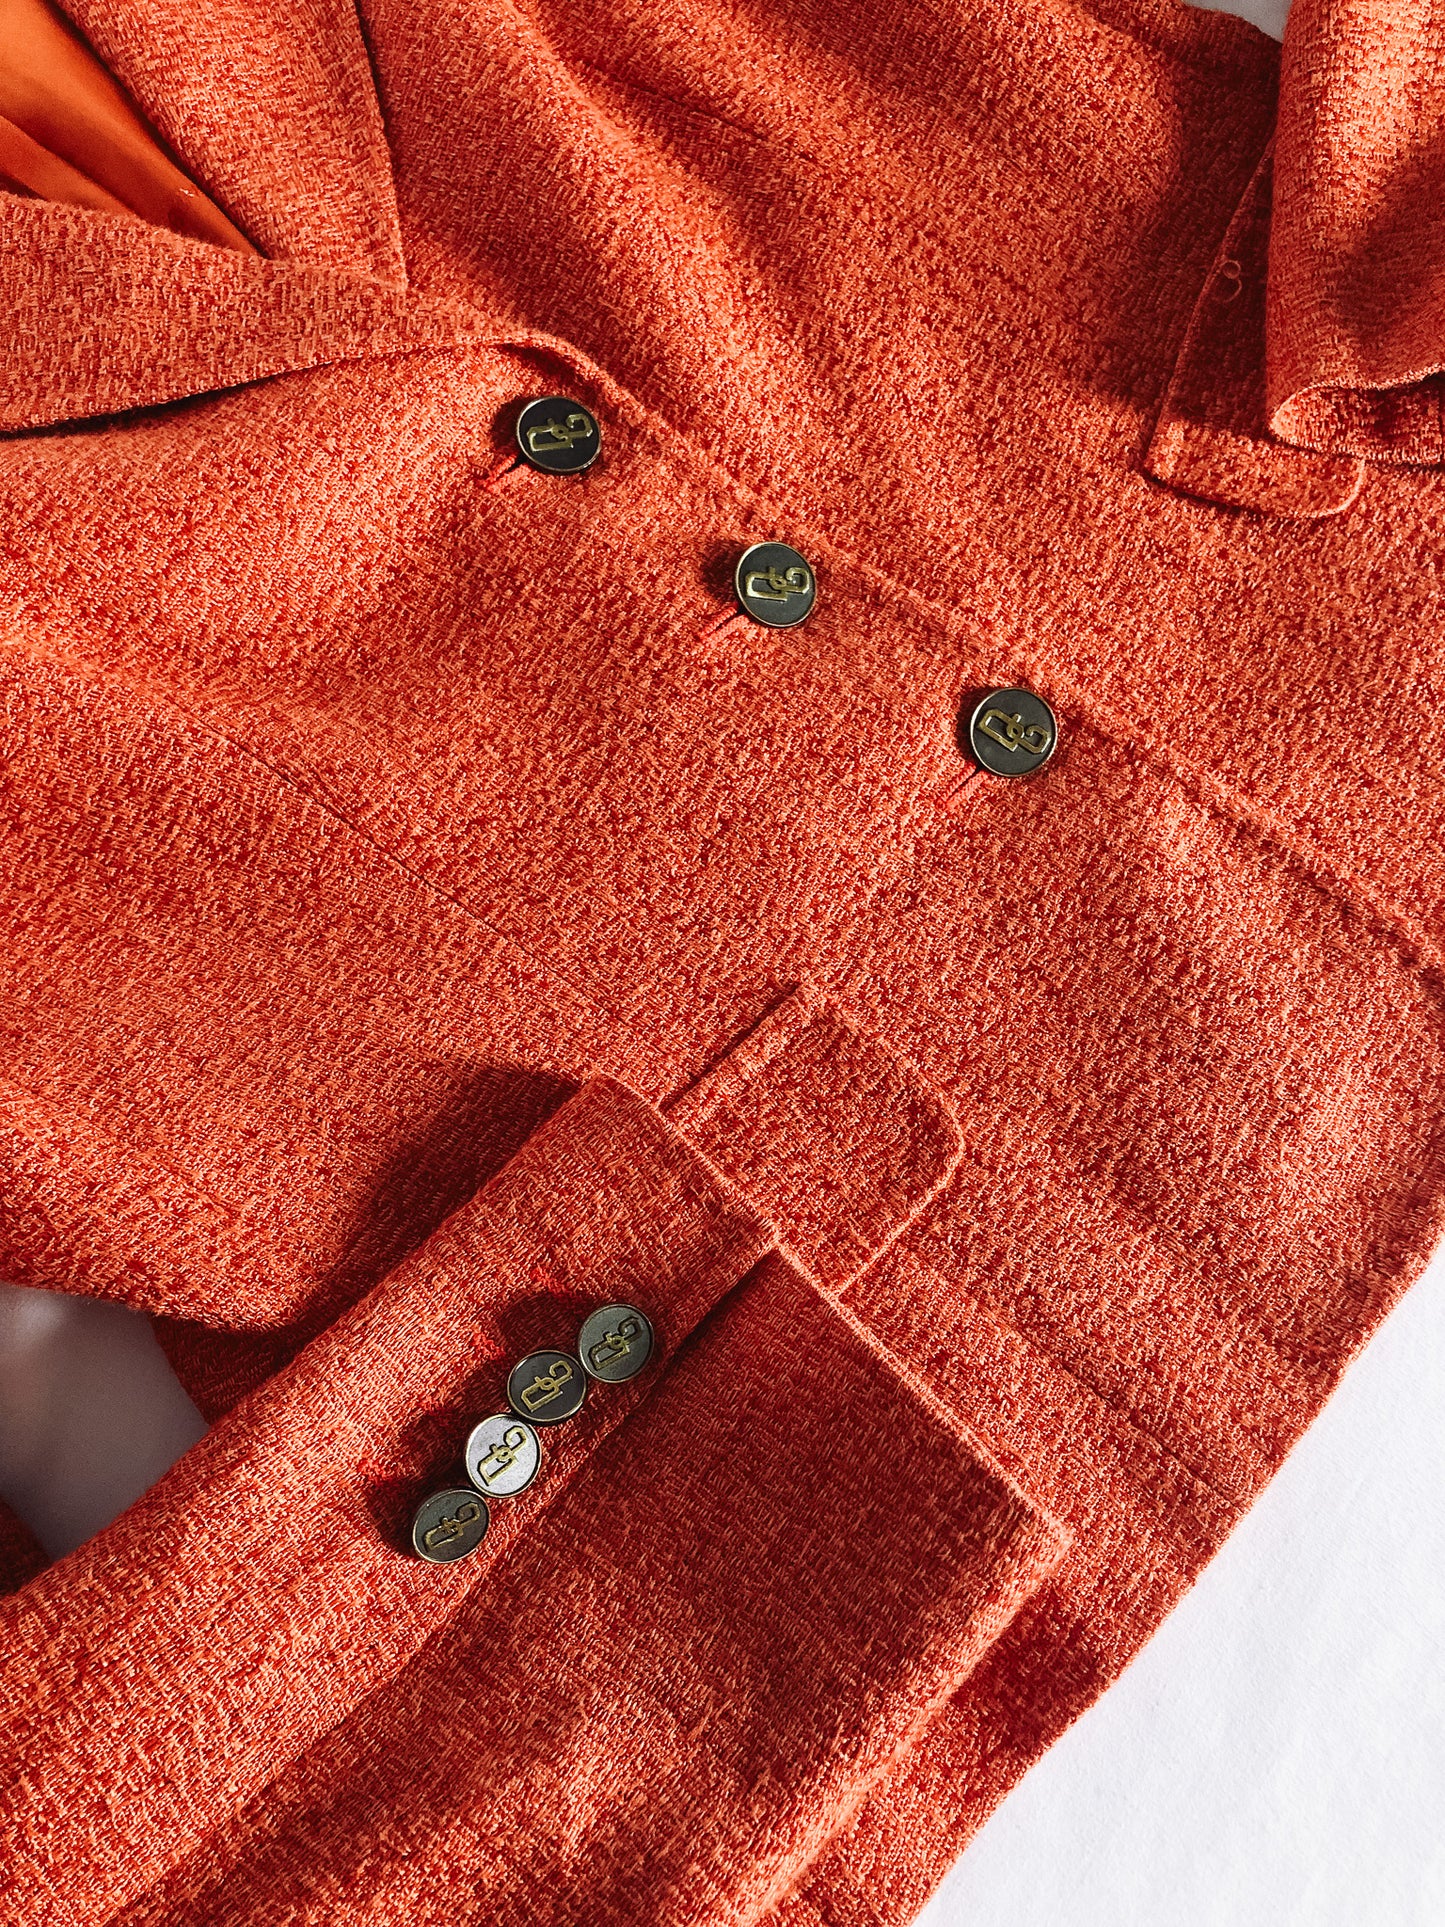 Vintage Dolce & Gabbana Orange Linen Blend Blazer Jacket, Sz. 46